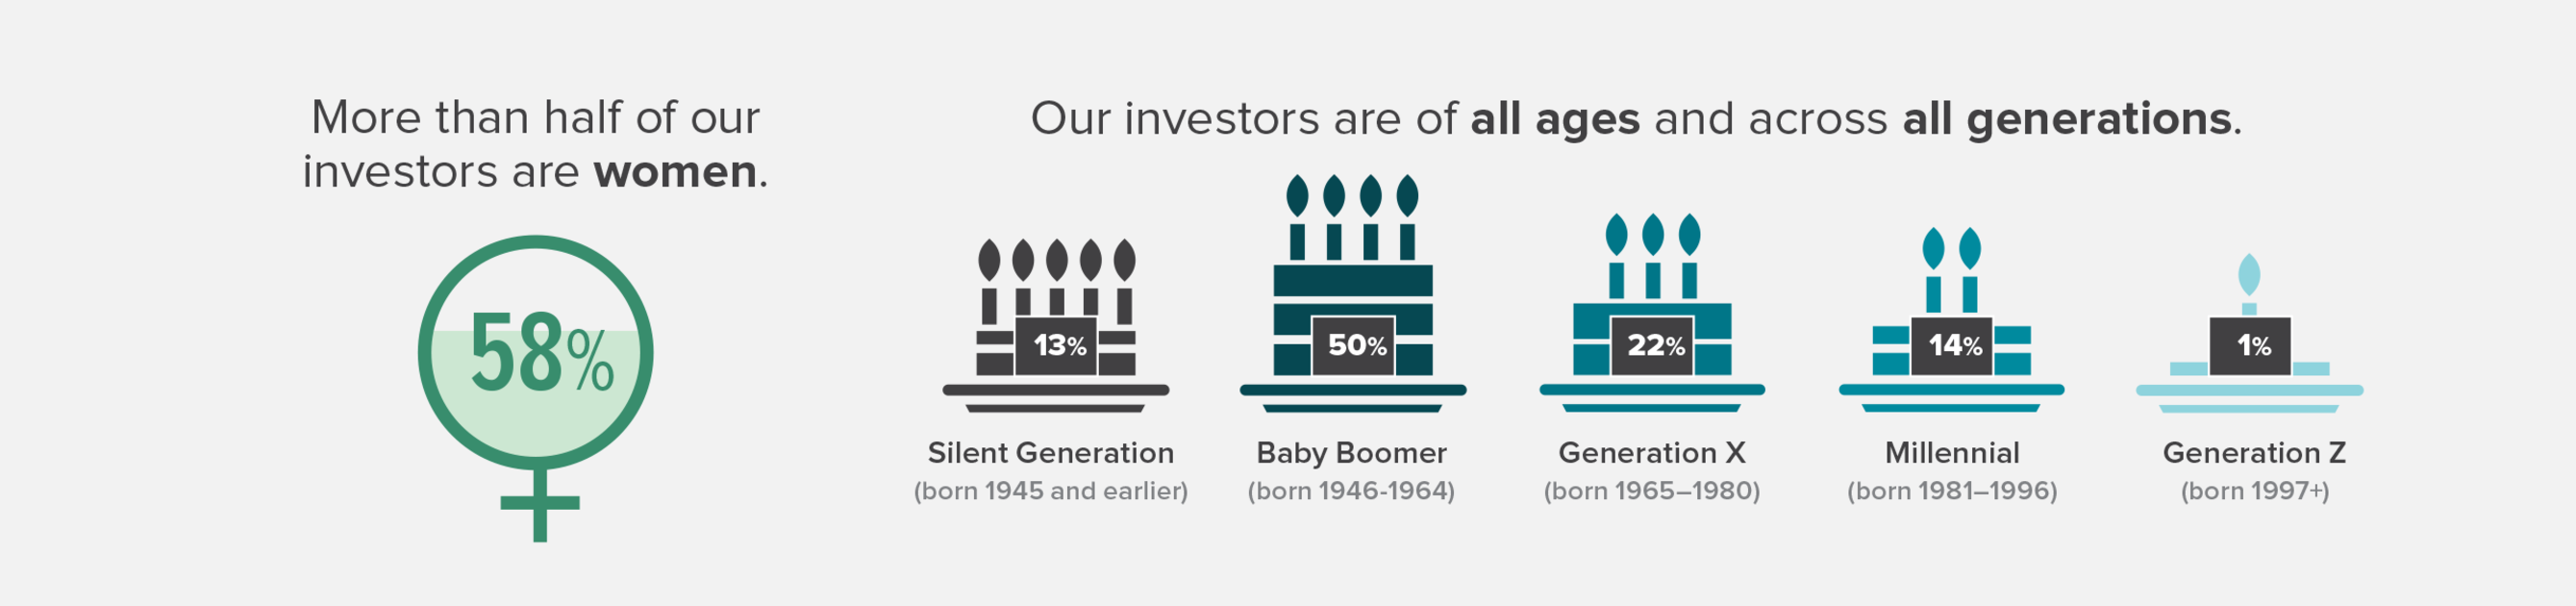 2020-investor-infographic-gender-age